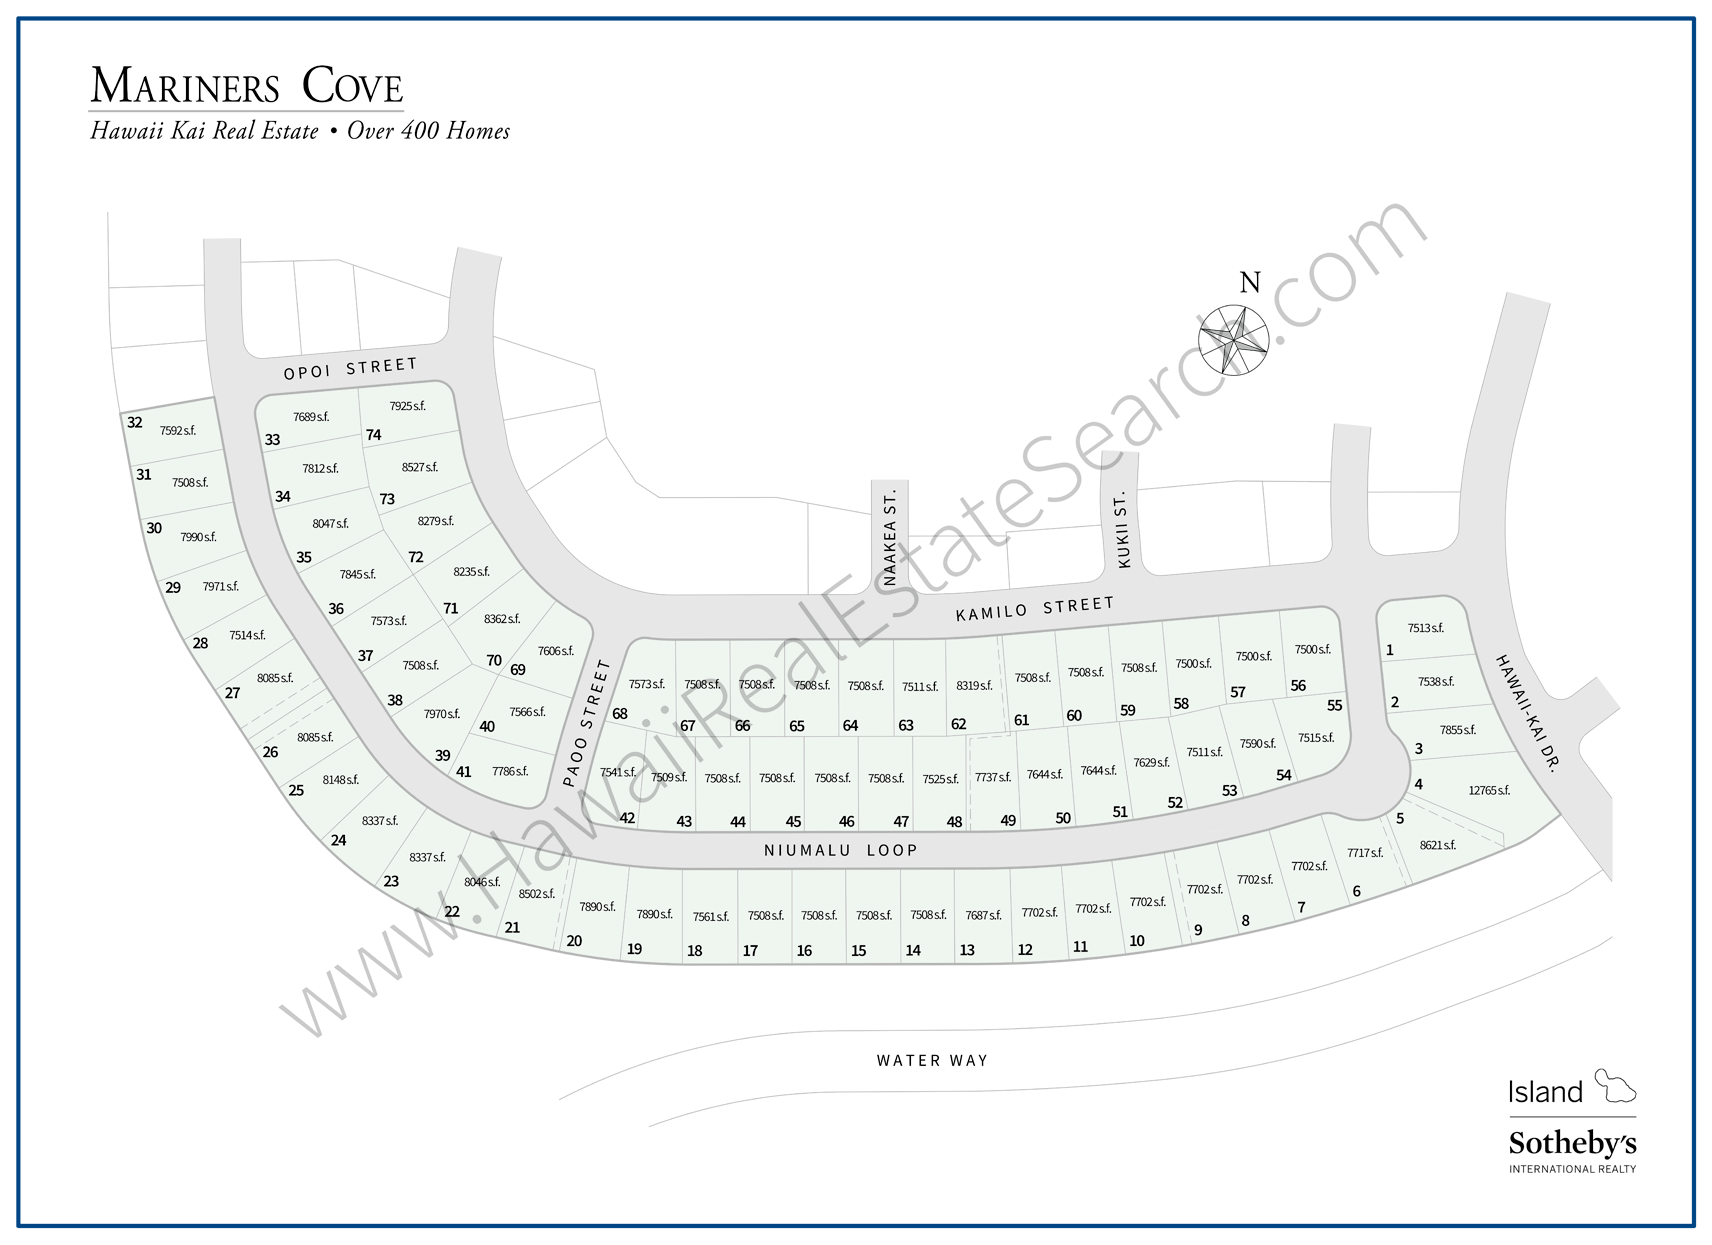 Mariners Cove Plat Map